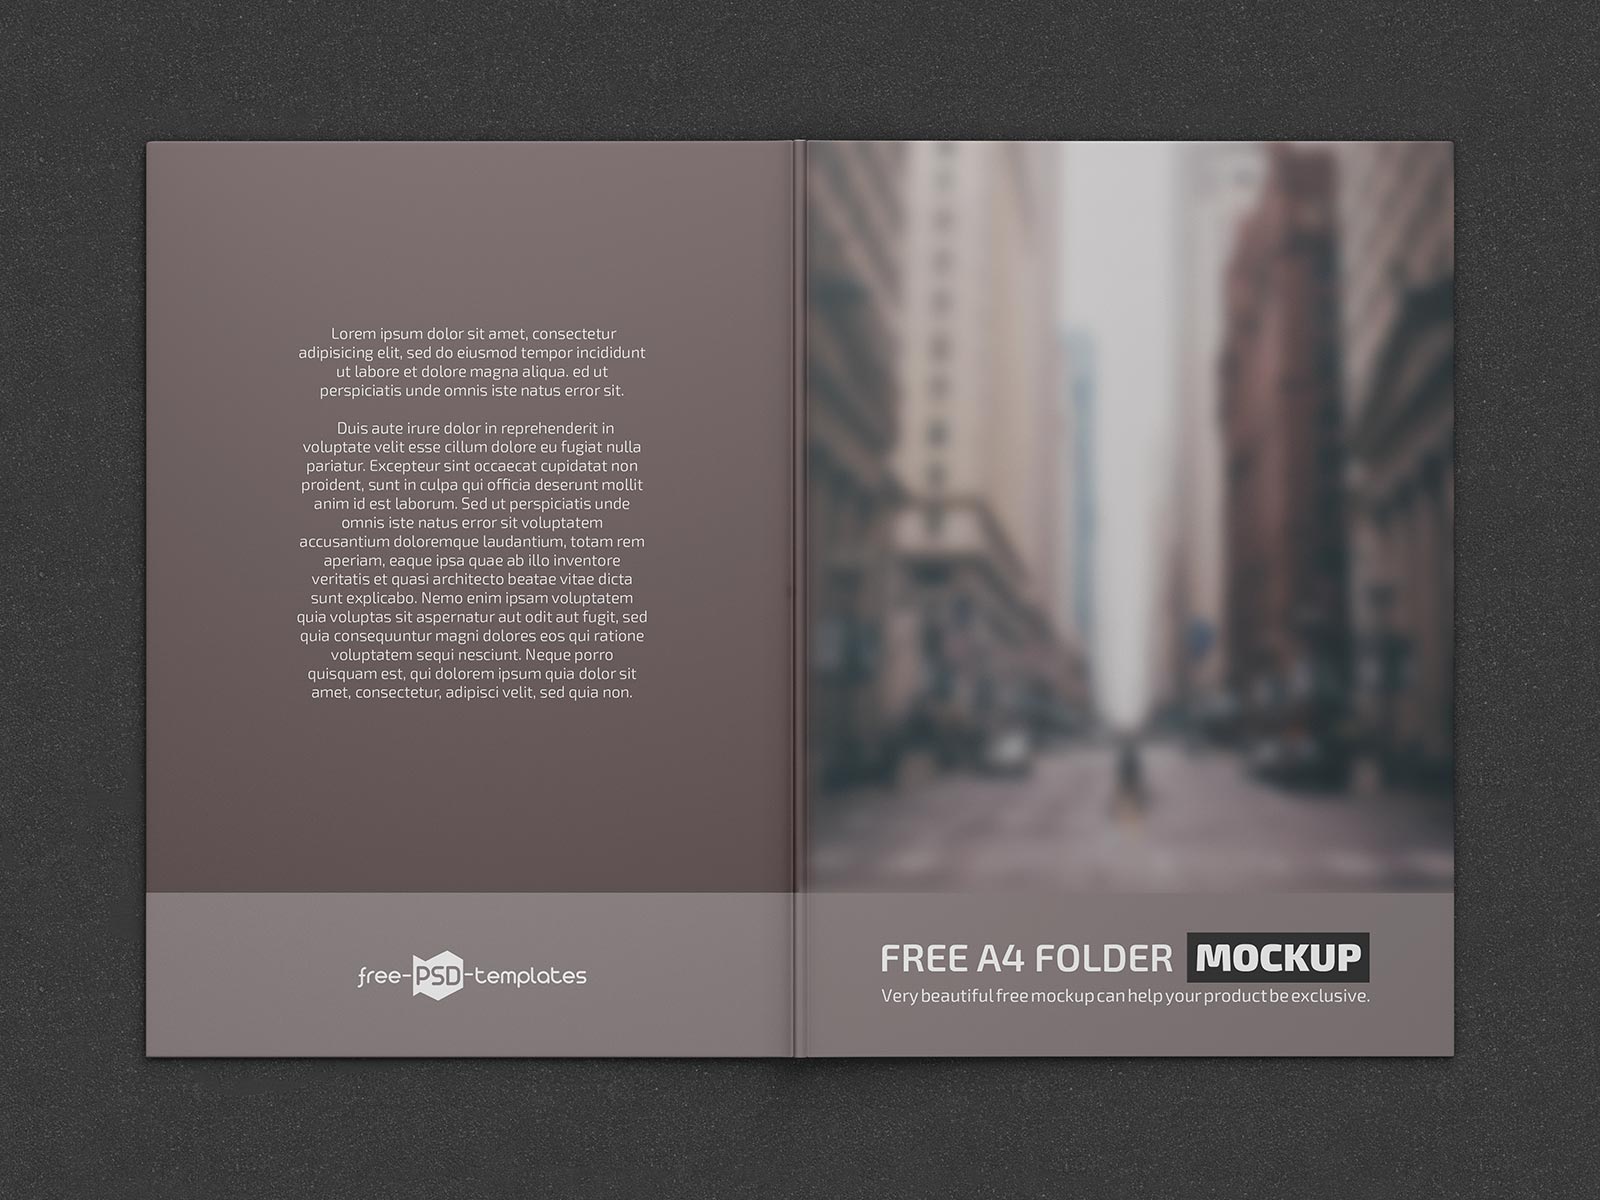 Free A4 Folder Mockup PSD Set